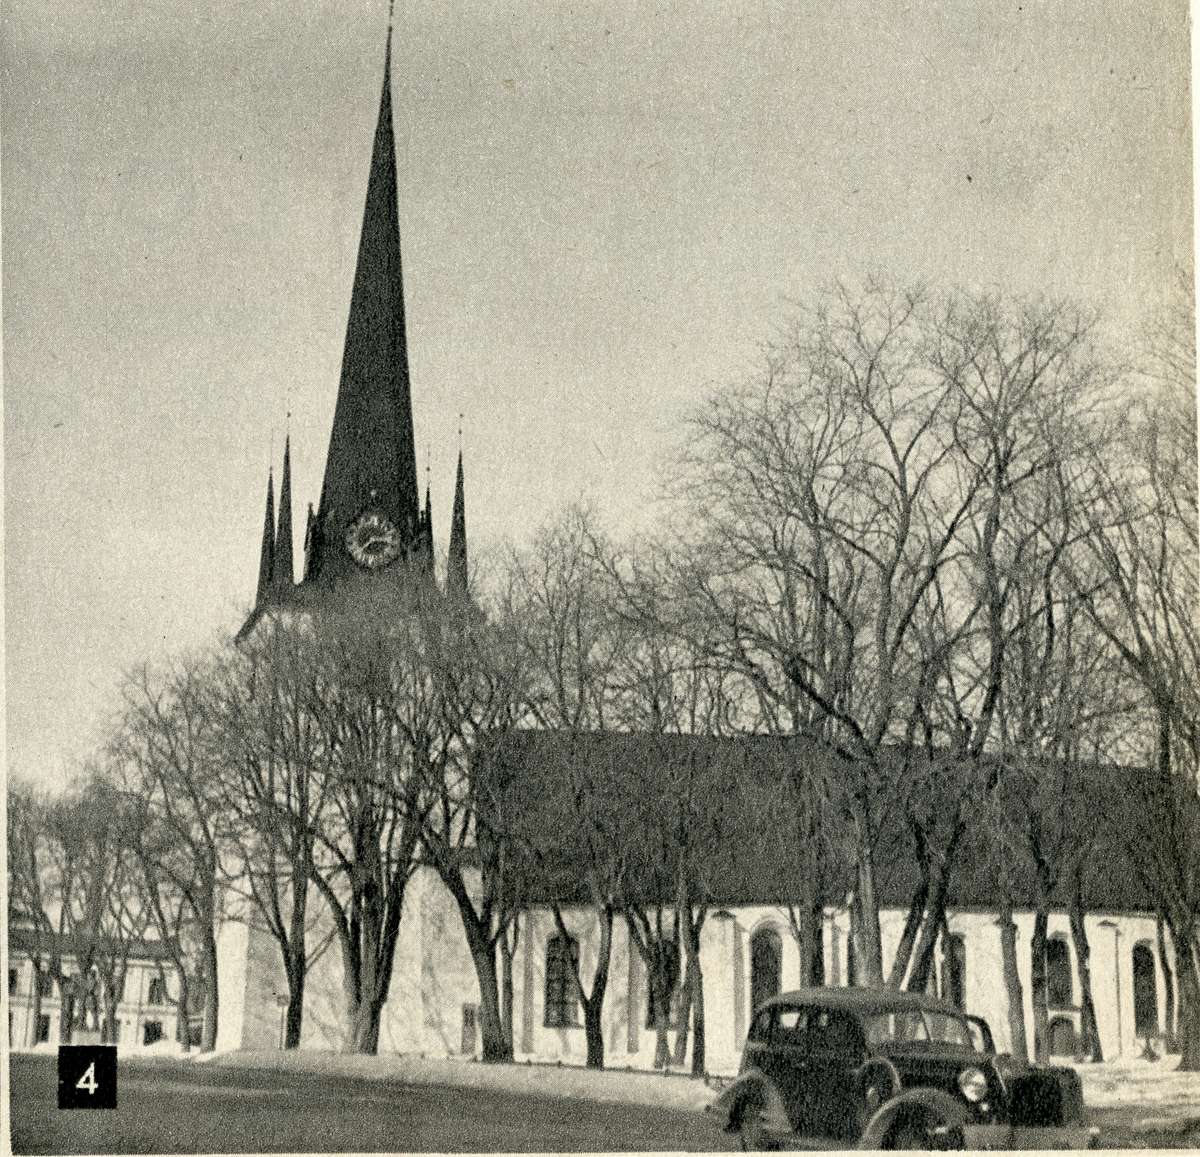 Arboga sf.
Trefaldighetskyrkan, 1942.